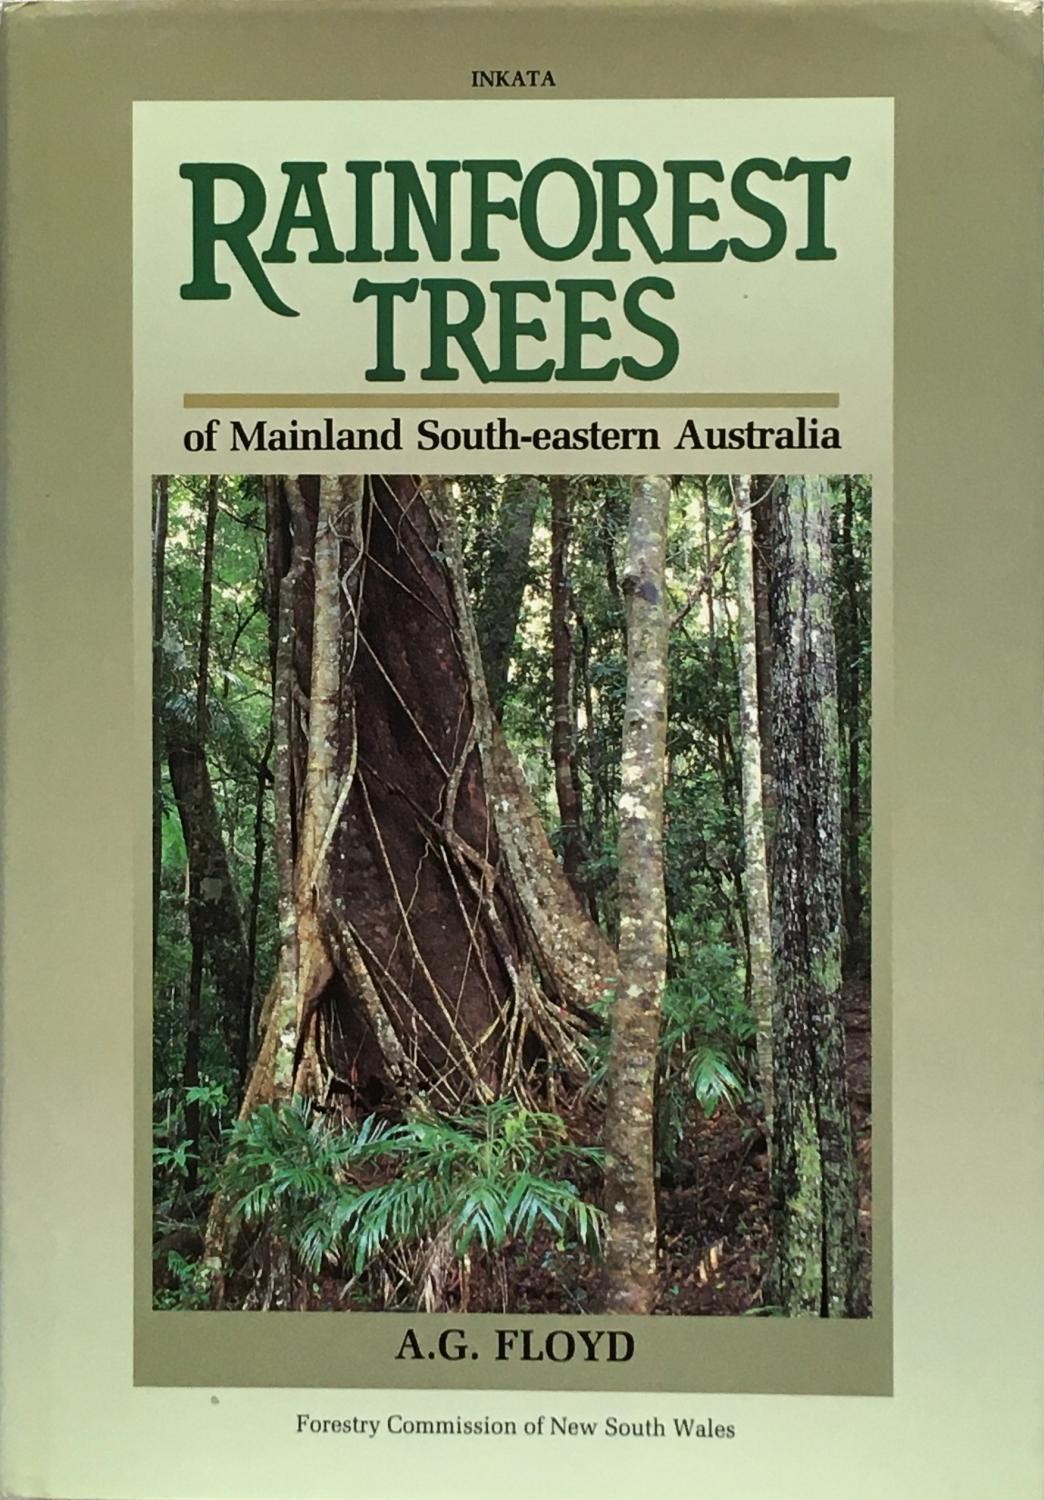 Rainforest trees of mainland south-eastern Australia - Floyd, A.G.